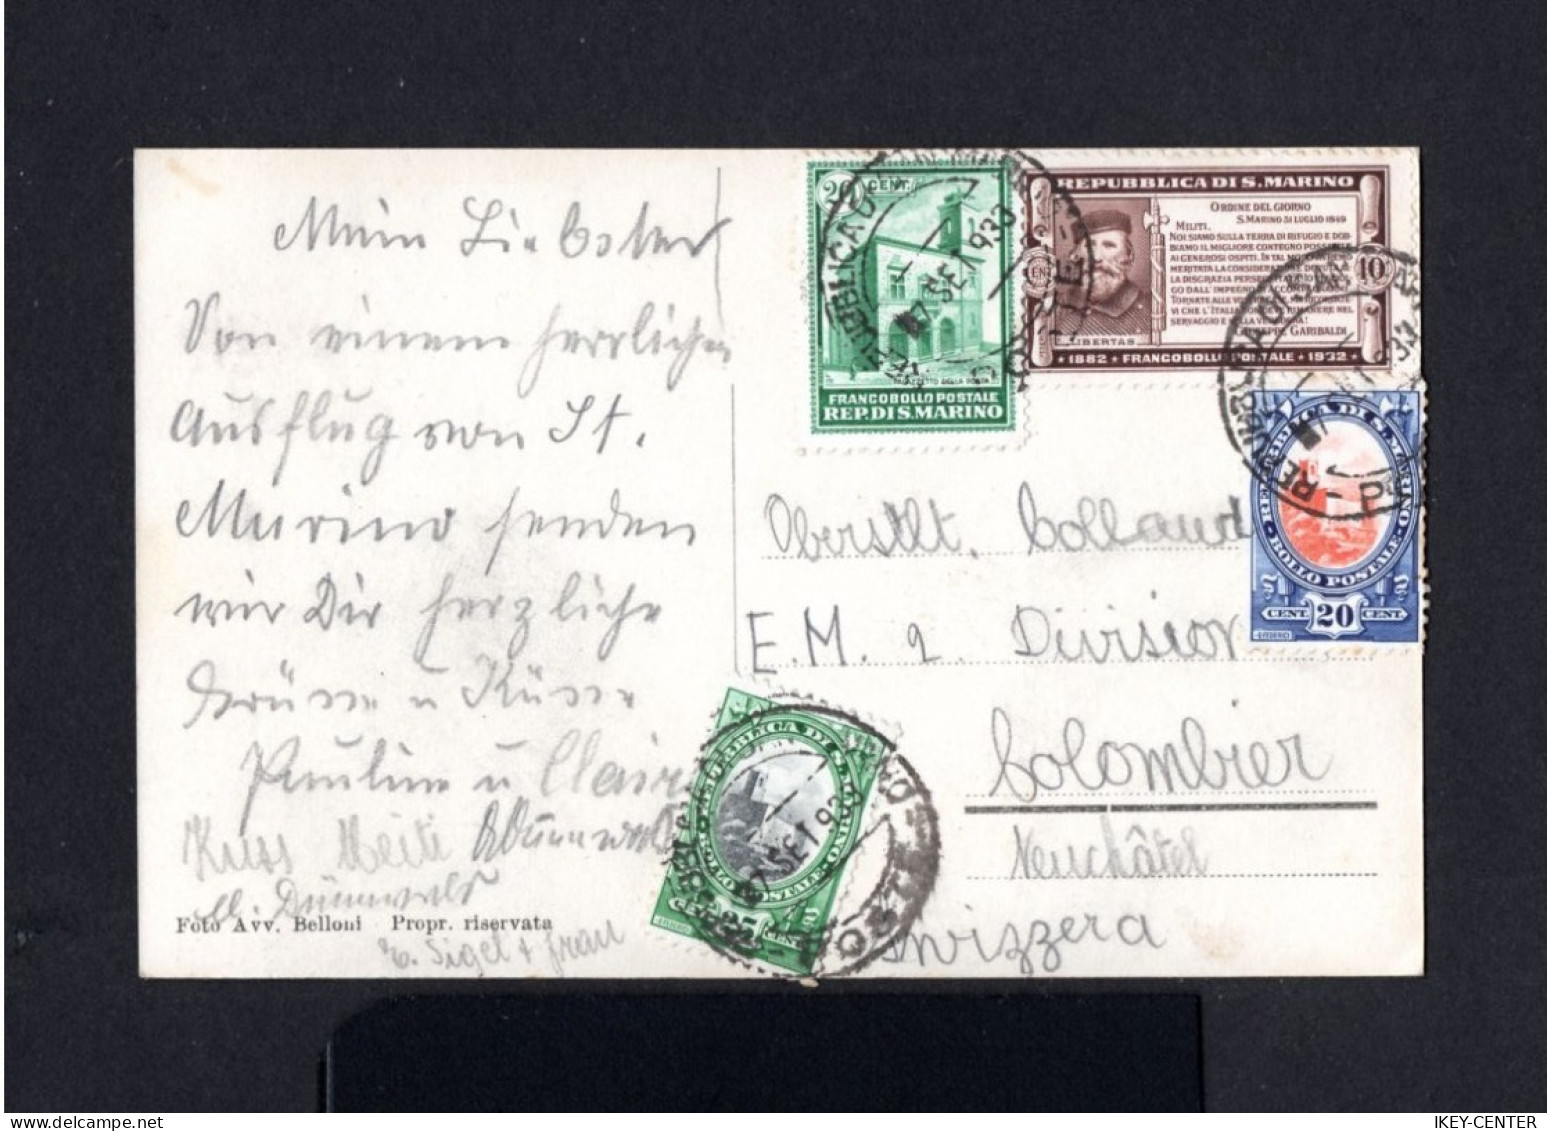 S5098-SAN MARINO-OLD POSTCARD SAINT MARIN To NEUCHATEL (switzerland).1933.WWII.Carte Postale.CARTOLINA.POSTKARTE - Covers & Documents